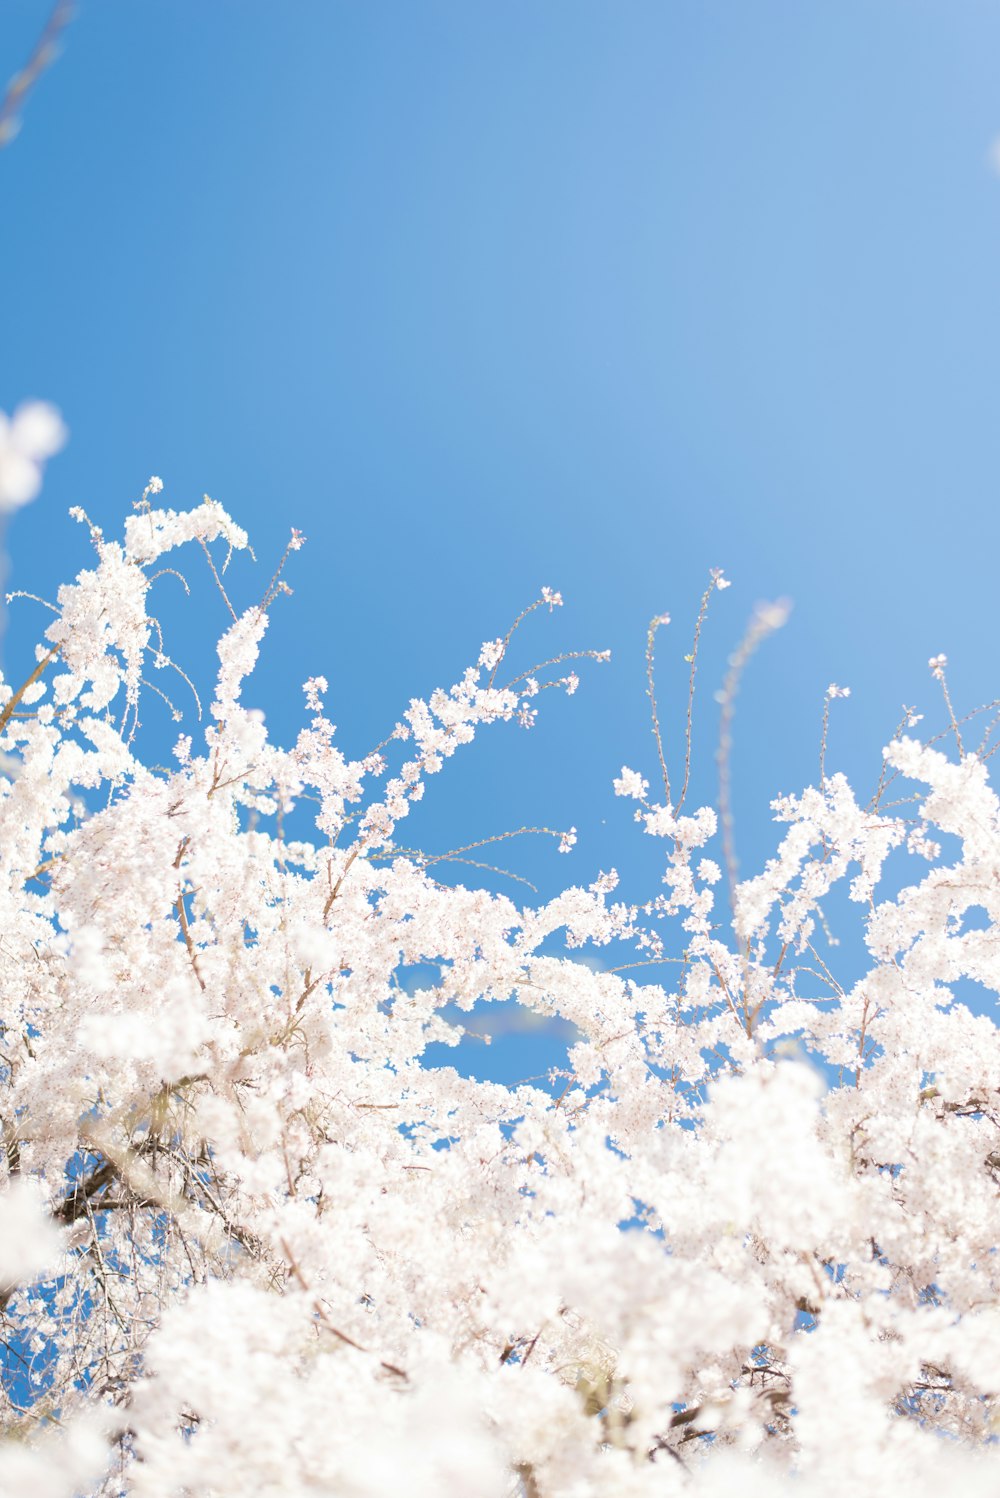 white flowers under blue sky during daytime